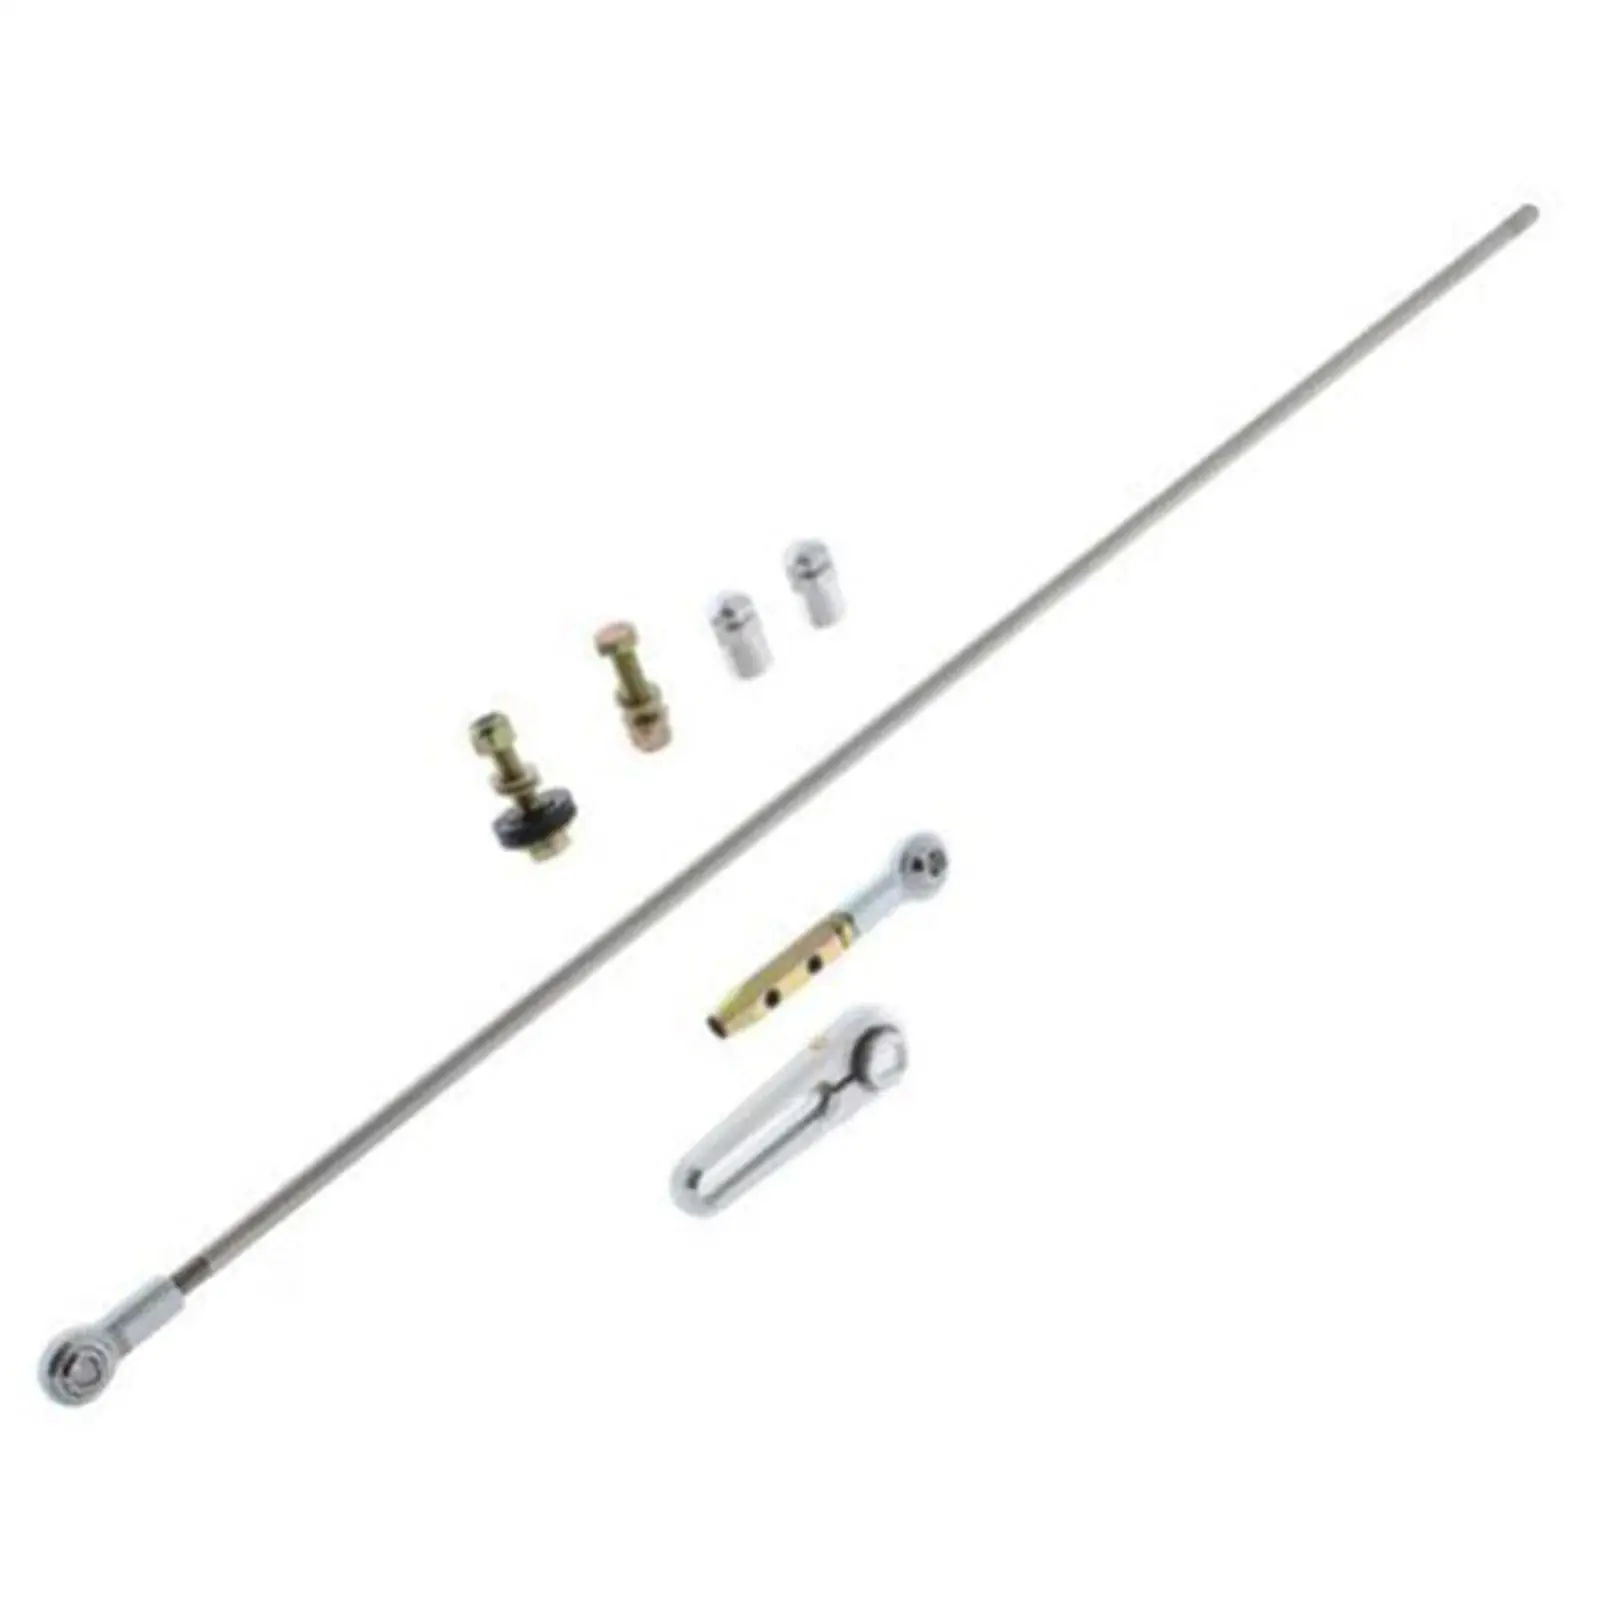 Transmission Column Shift Linkage Kit High Performance Durable Spare Parts Billet Aluminum Column Arm Kit for GM 700R4 4L60